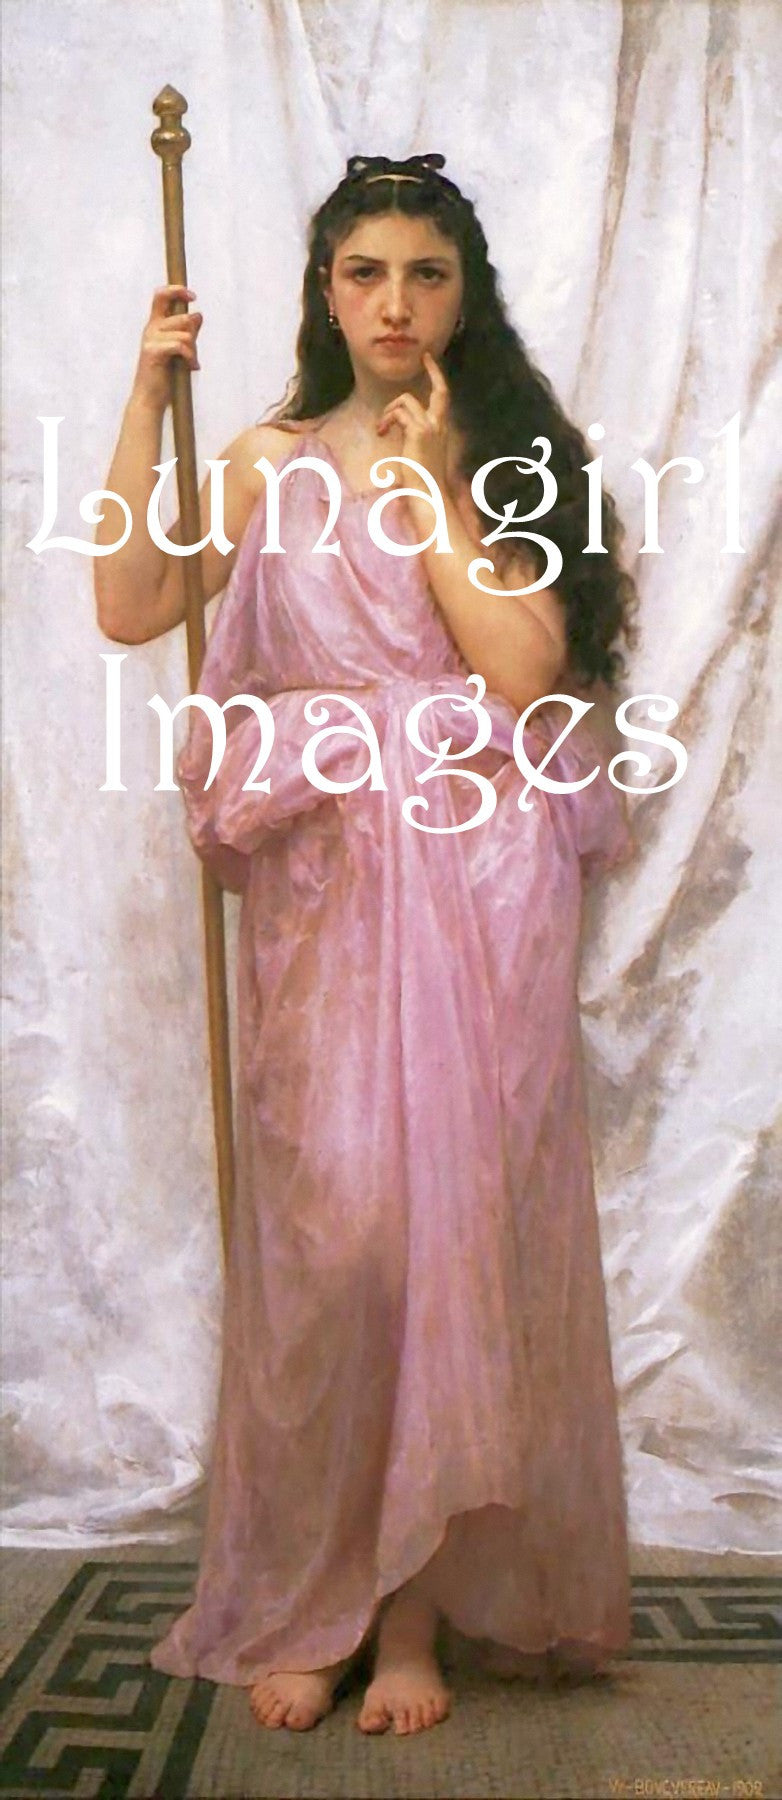 Paintings of William Bouguereau: 200 Images - Lunagirl